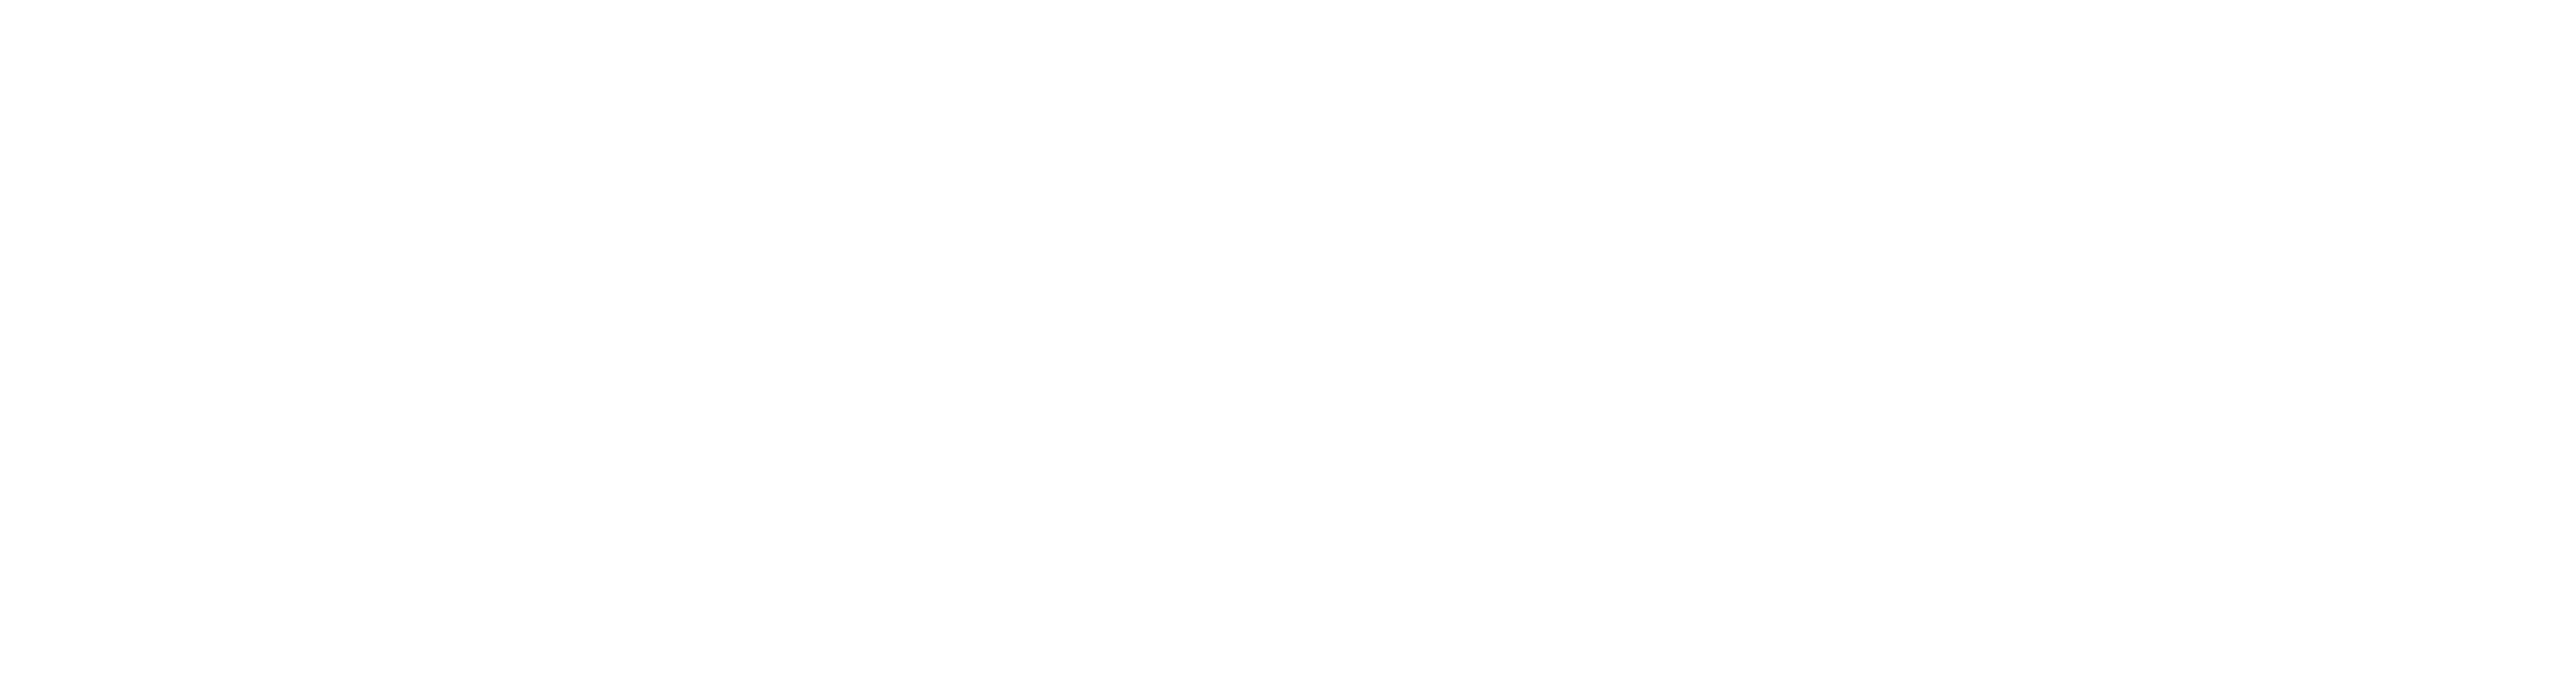 https://www.yugabyte.com/wp-content/uploads/2021/02/Turvo-Logo.png